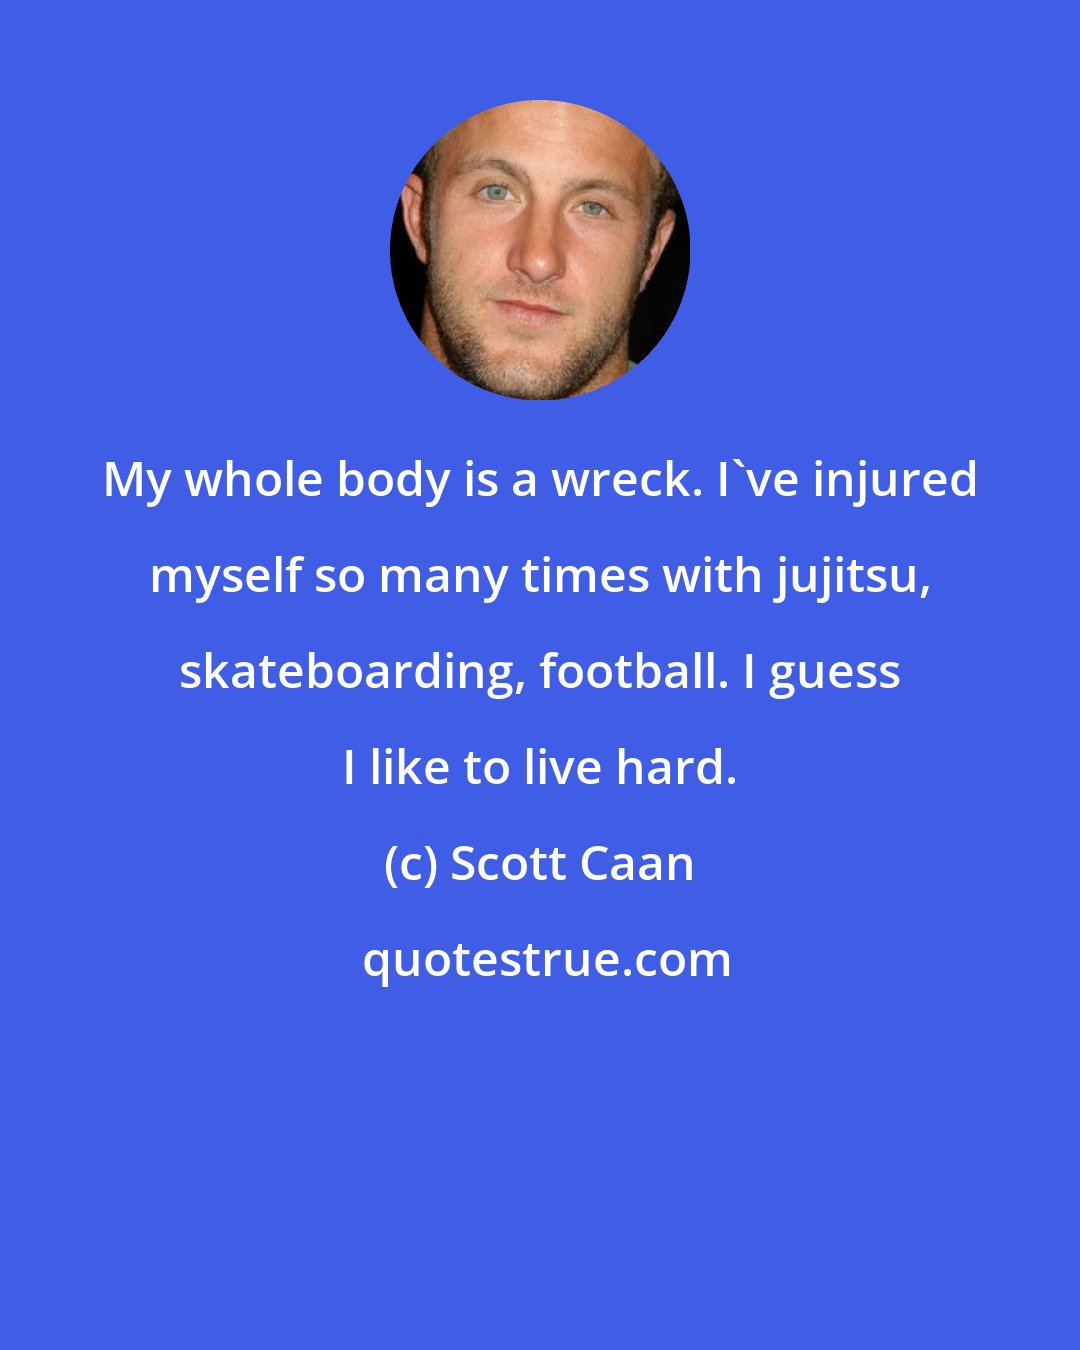 Scott Caan: My whole body is a wreck. I've injured myself so many times with jujitsu, skateboarding, football. I guess I like to live hard.